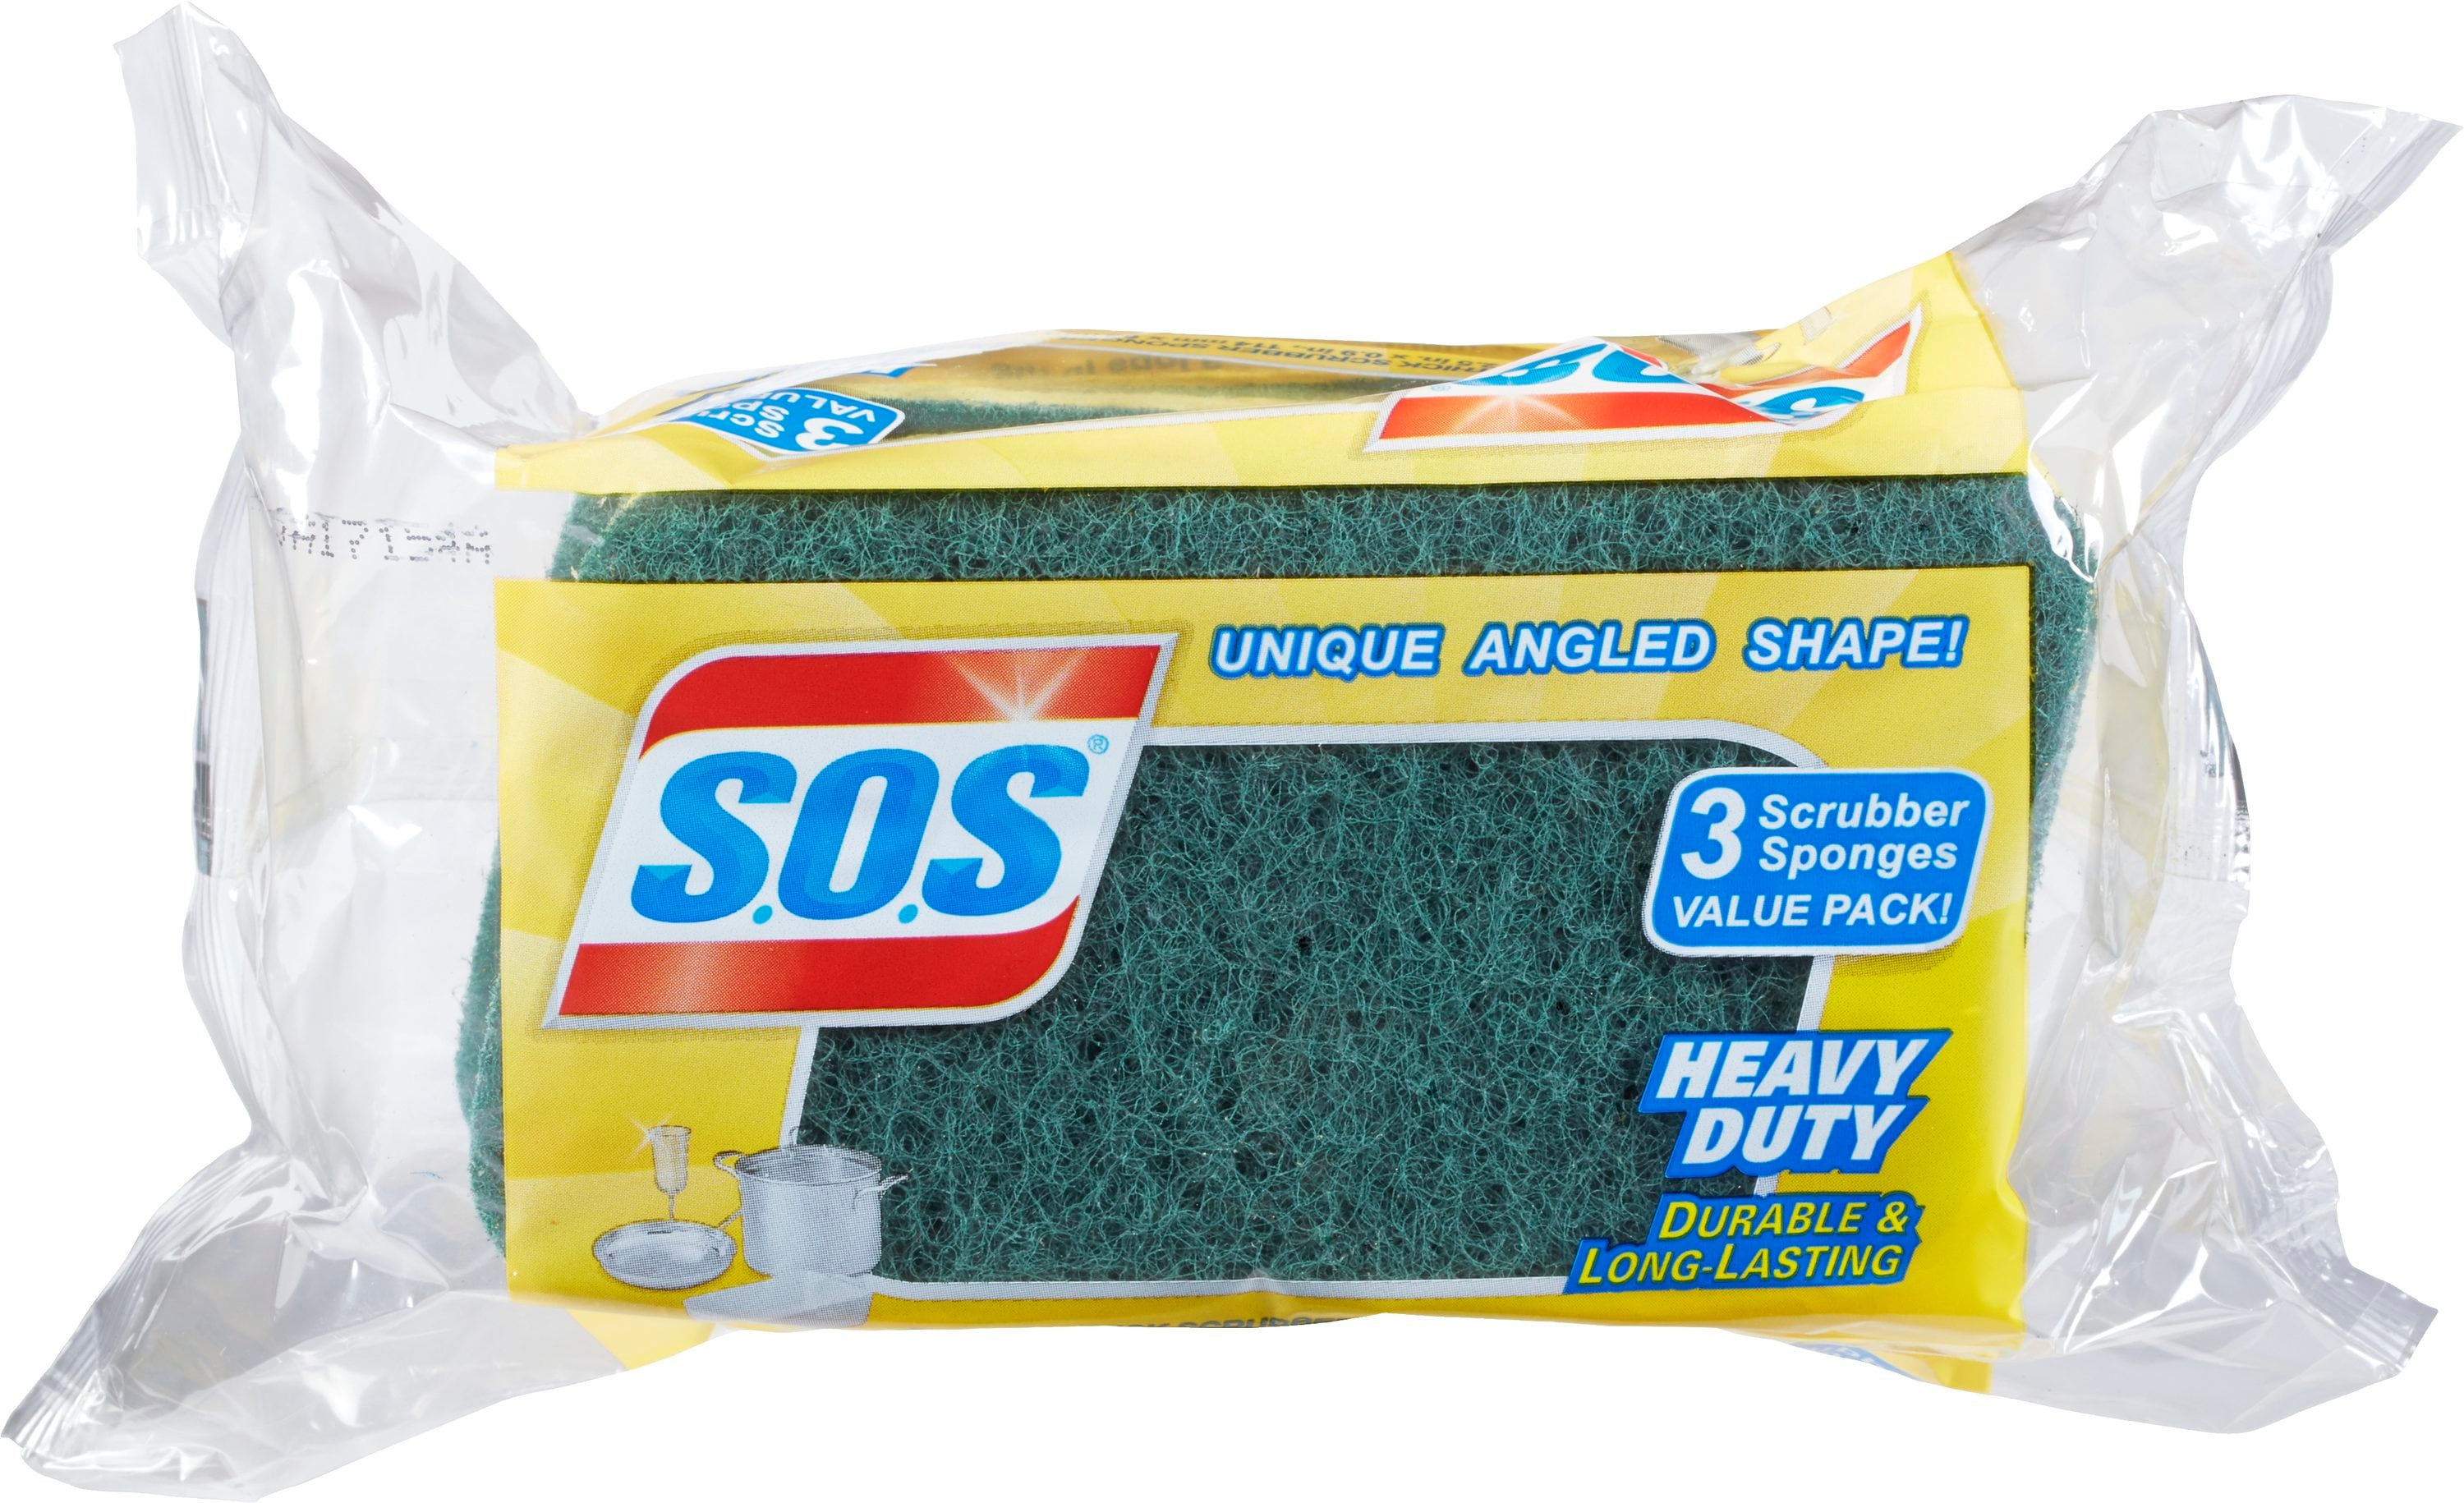 Estracell Heavy Duty Scrub Sponge